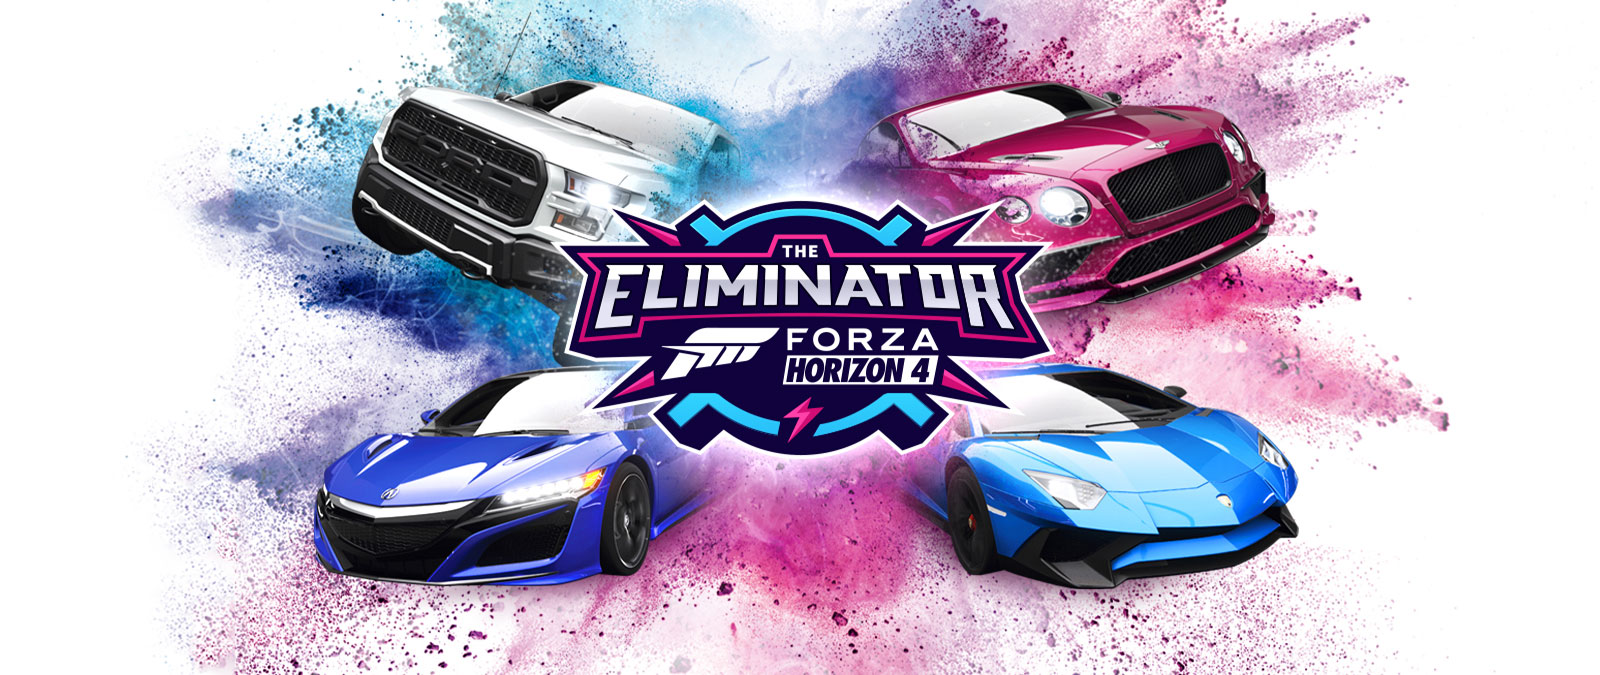 The Eliminator Forza Horizon 4 標誌，四輛車子周圍有著藍色和粉紅色粉末